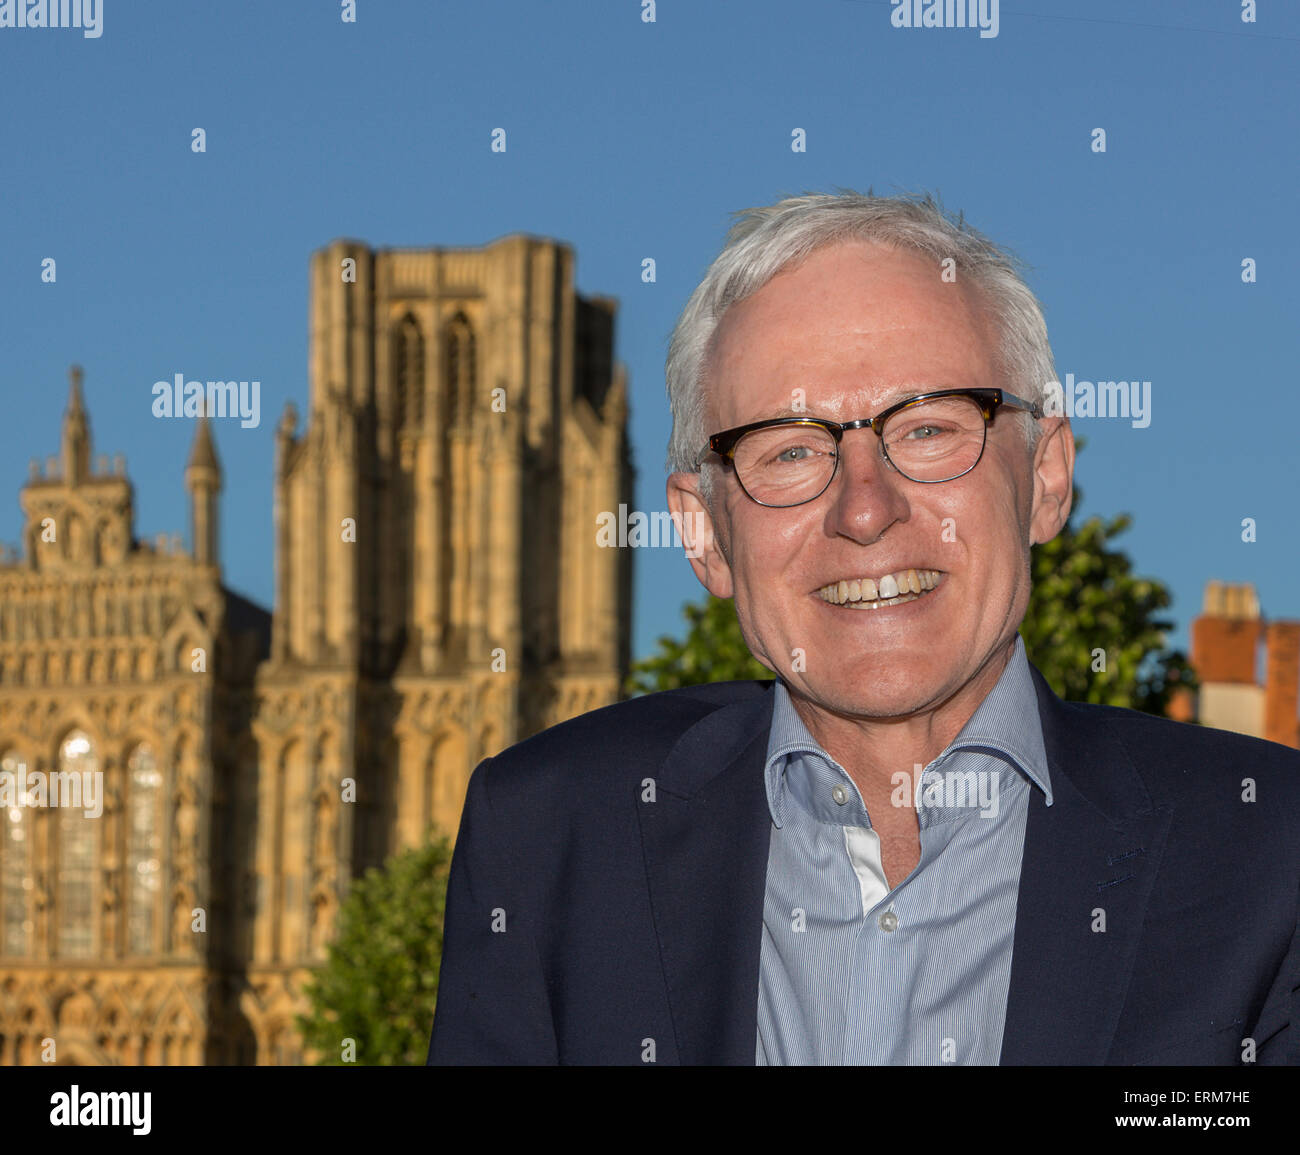 Norman Lamb on his bid for leadership of the Liberal Democrats Stock Photo